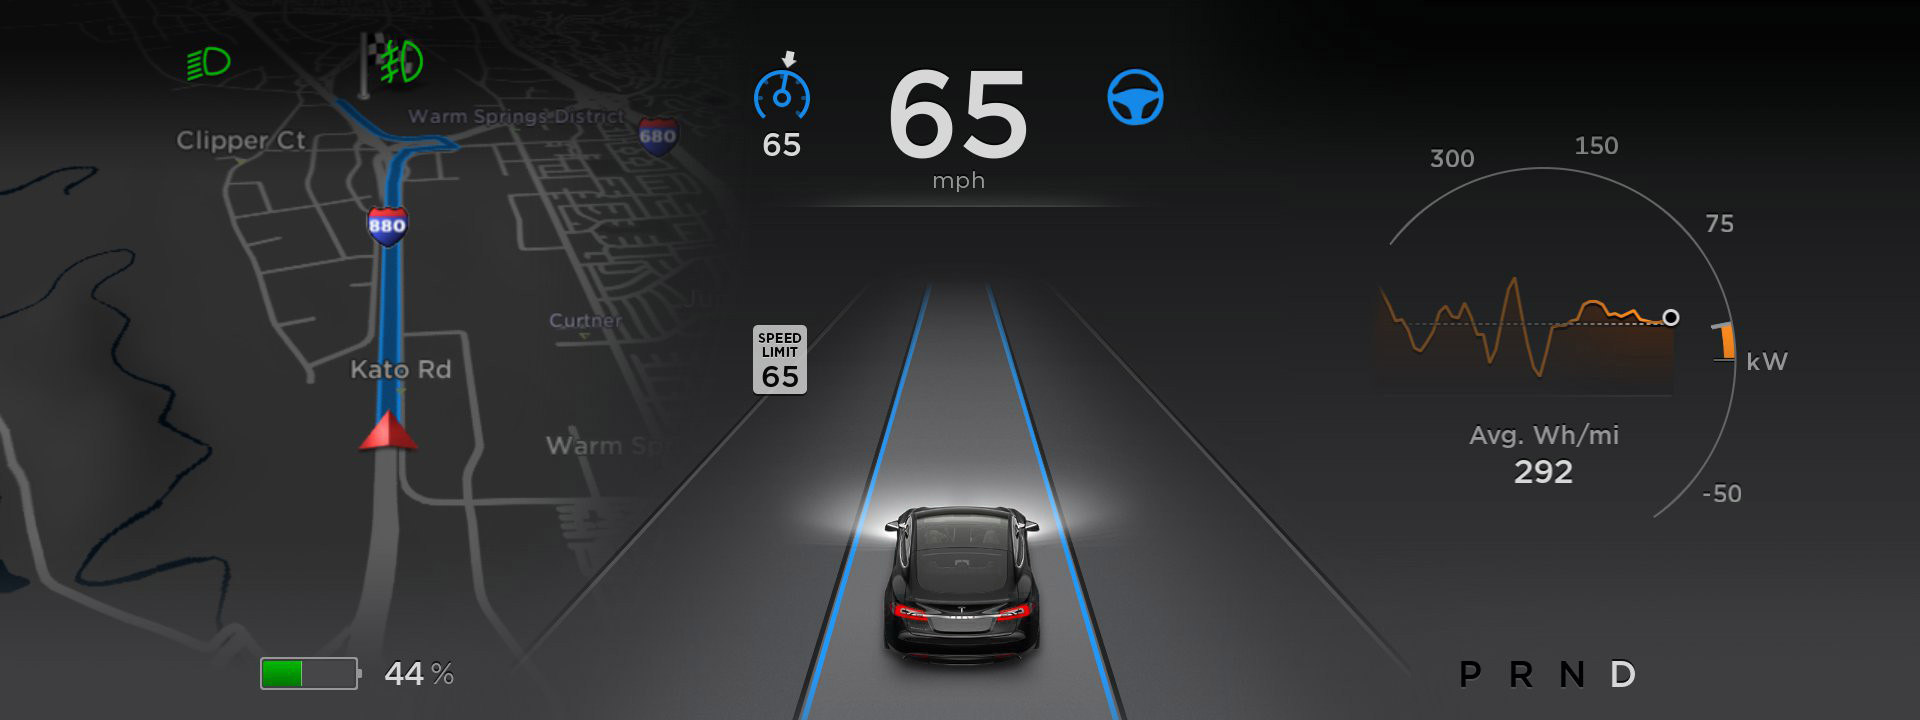 Tesla Model S autopilot graphics